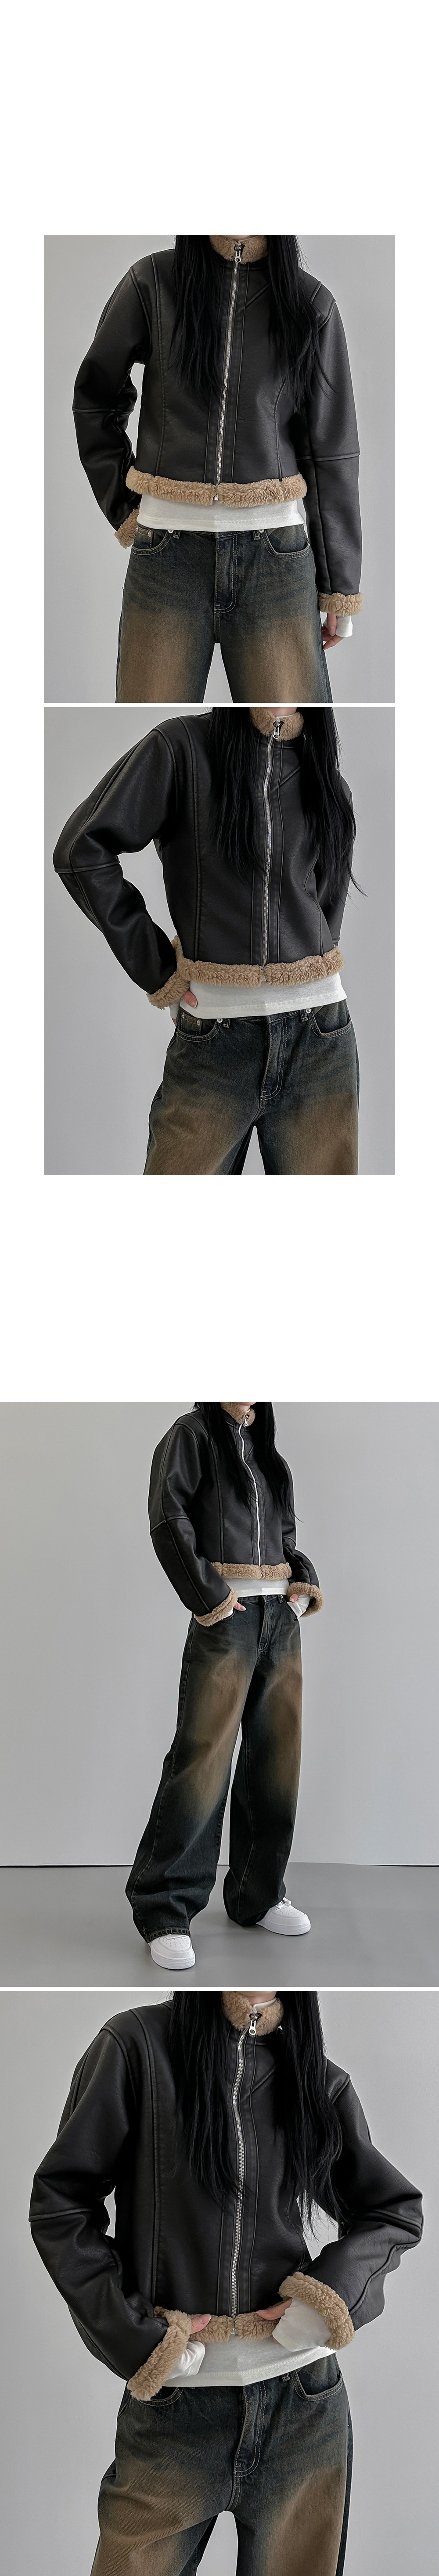 Jacket grey color image-S1L20